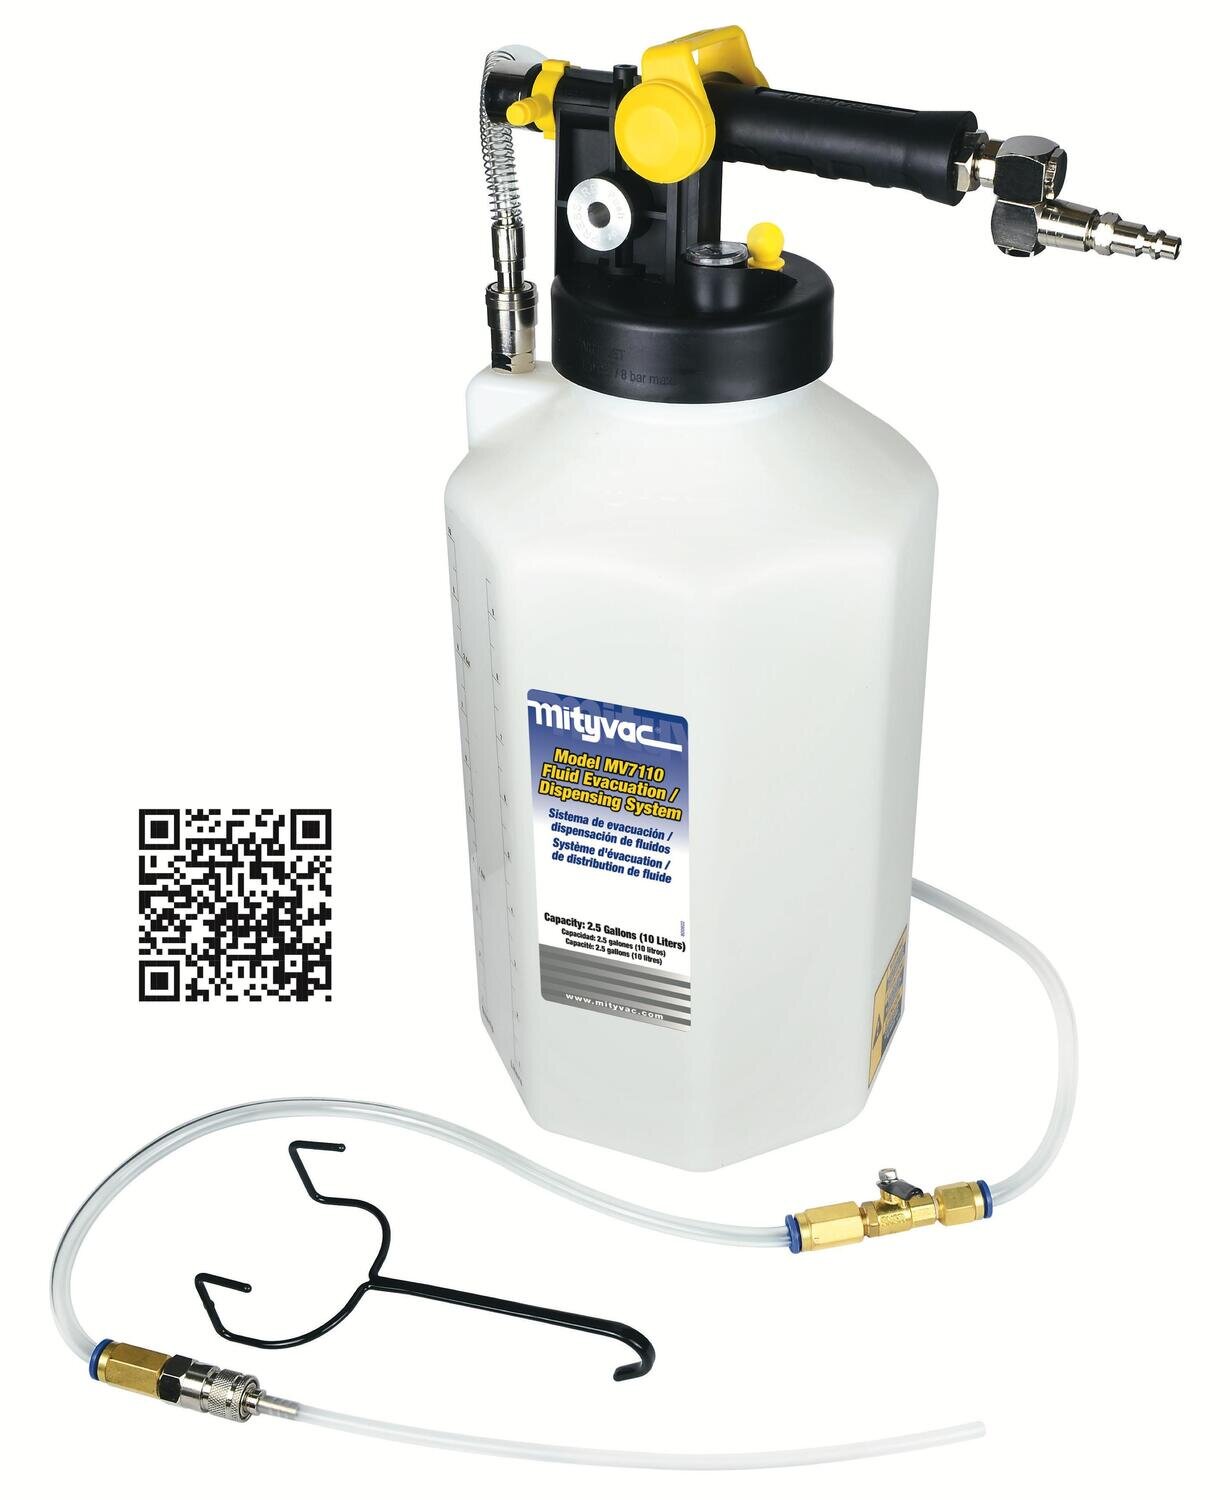 NEMV7110 - 2.5 Gallon Pneumatic Fluid Evacuator/Dispenser